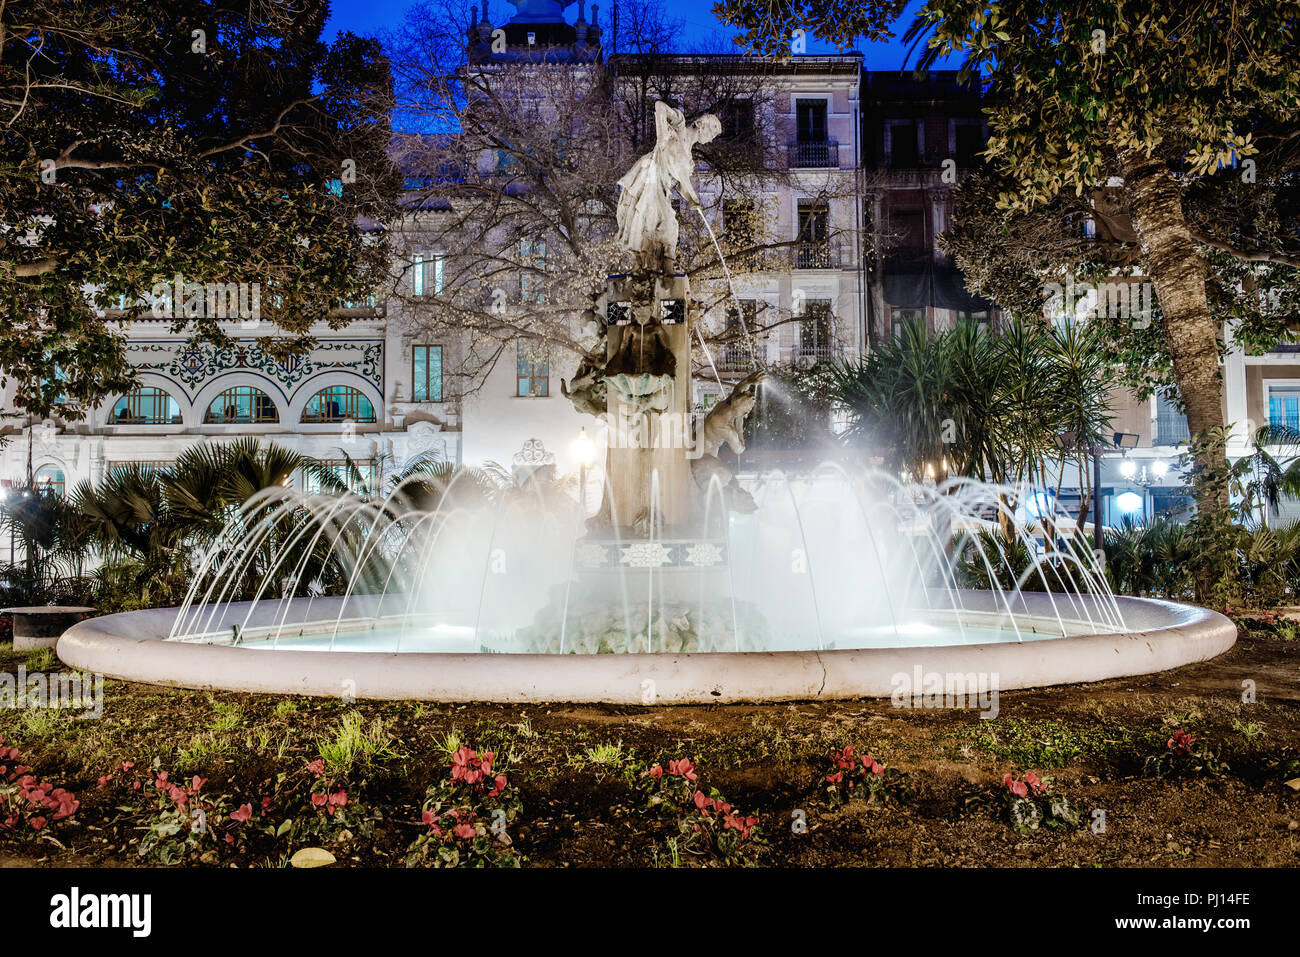 Fountain at Plaza Gabriel Miro square. Sculpture, statue of girl and splashing water illuminated at night. Alicante city, Costa Blanca. Spain Stock Photo